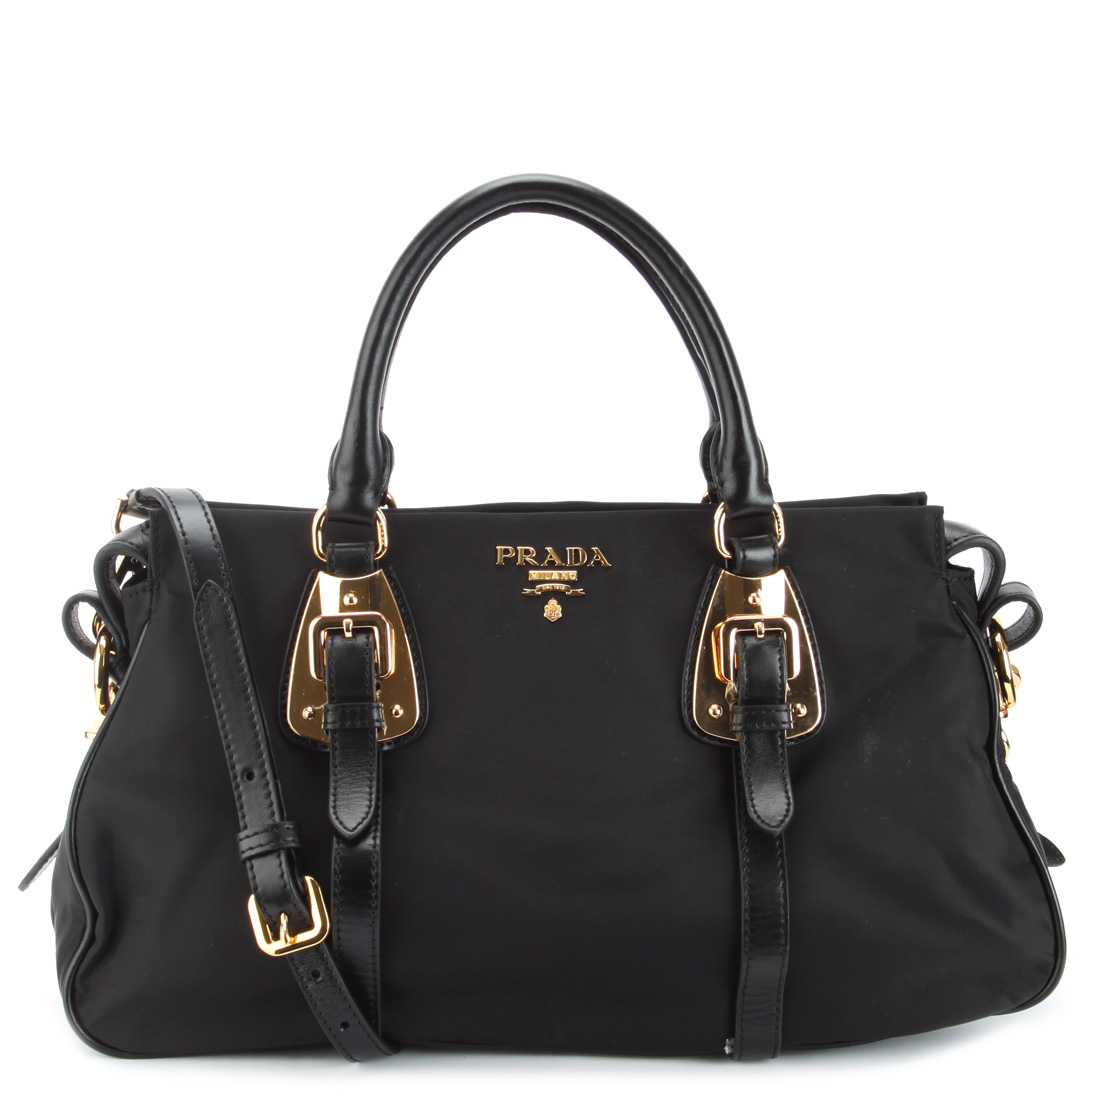 authentic prada handbags wholesale, wallet prada price